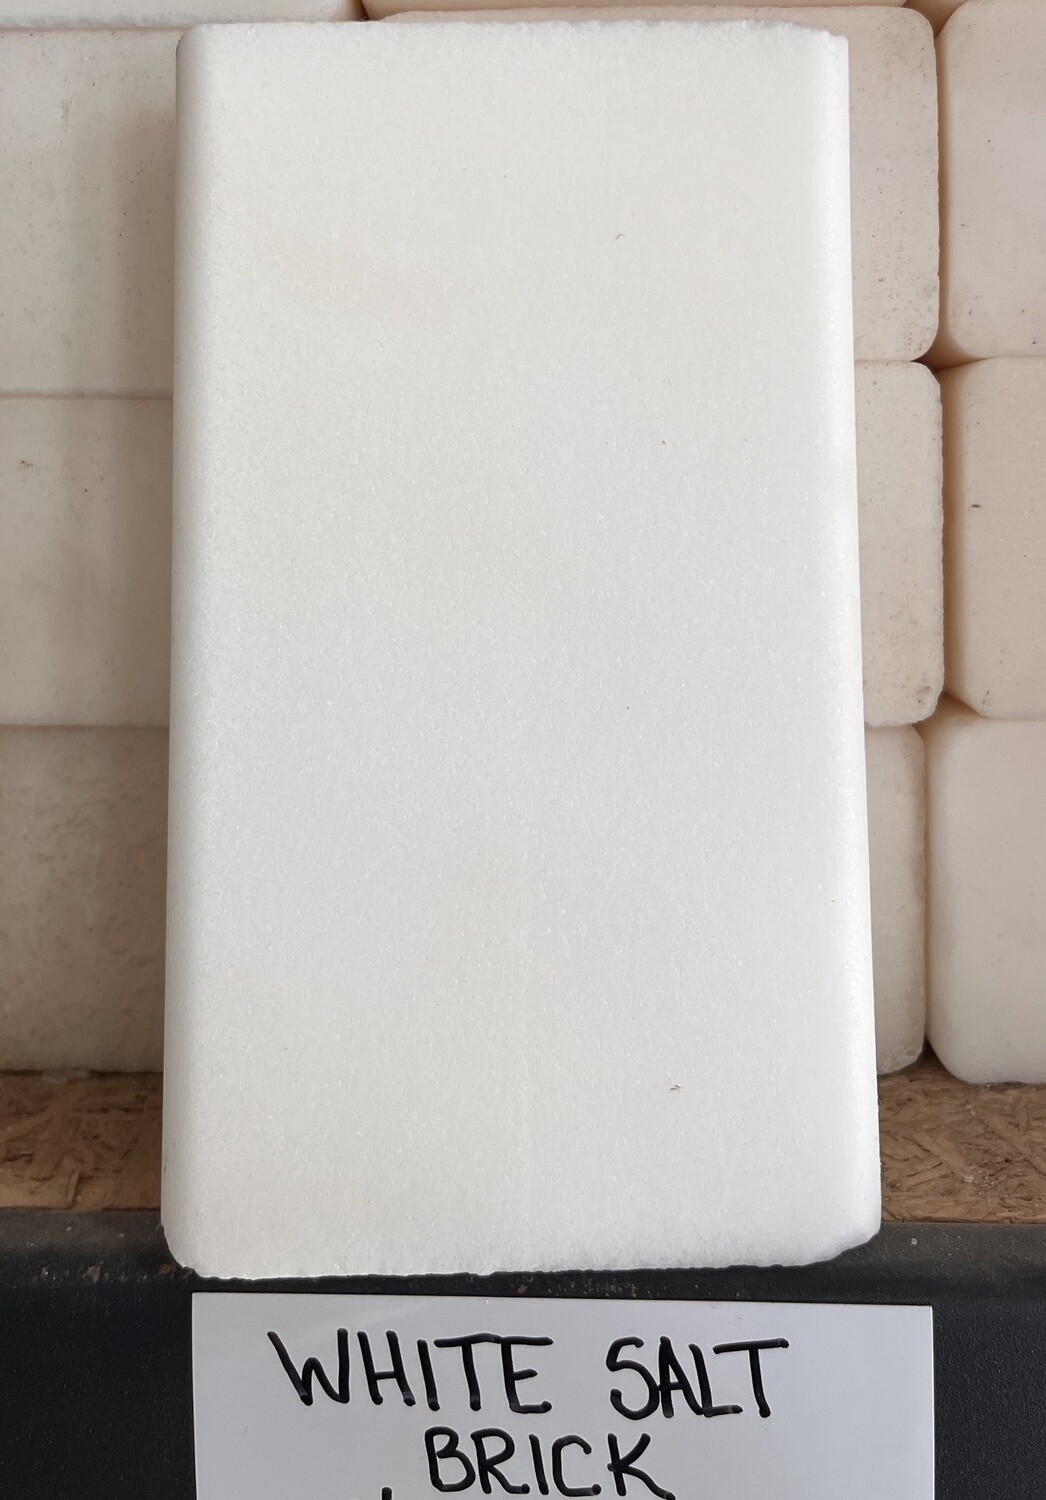 Plain White Salt Brick